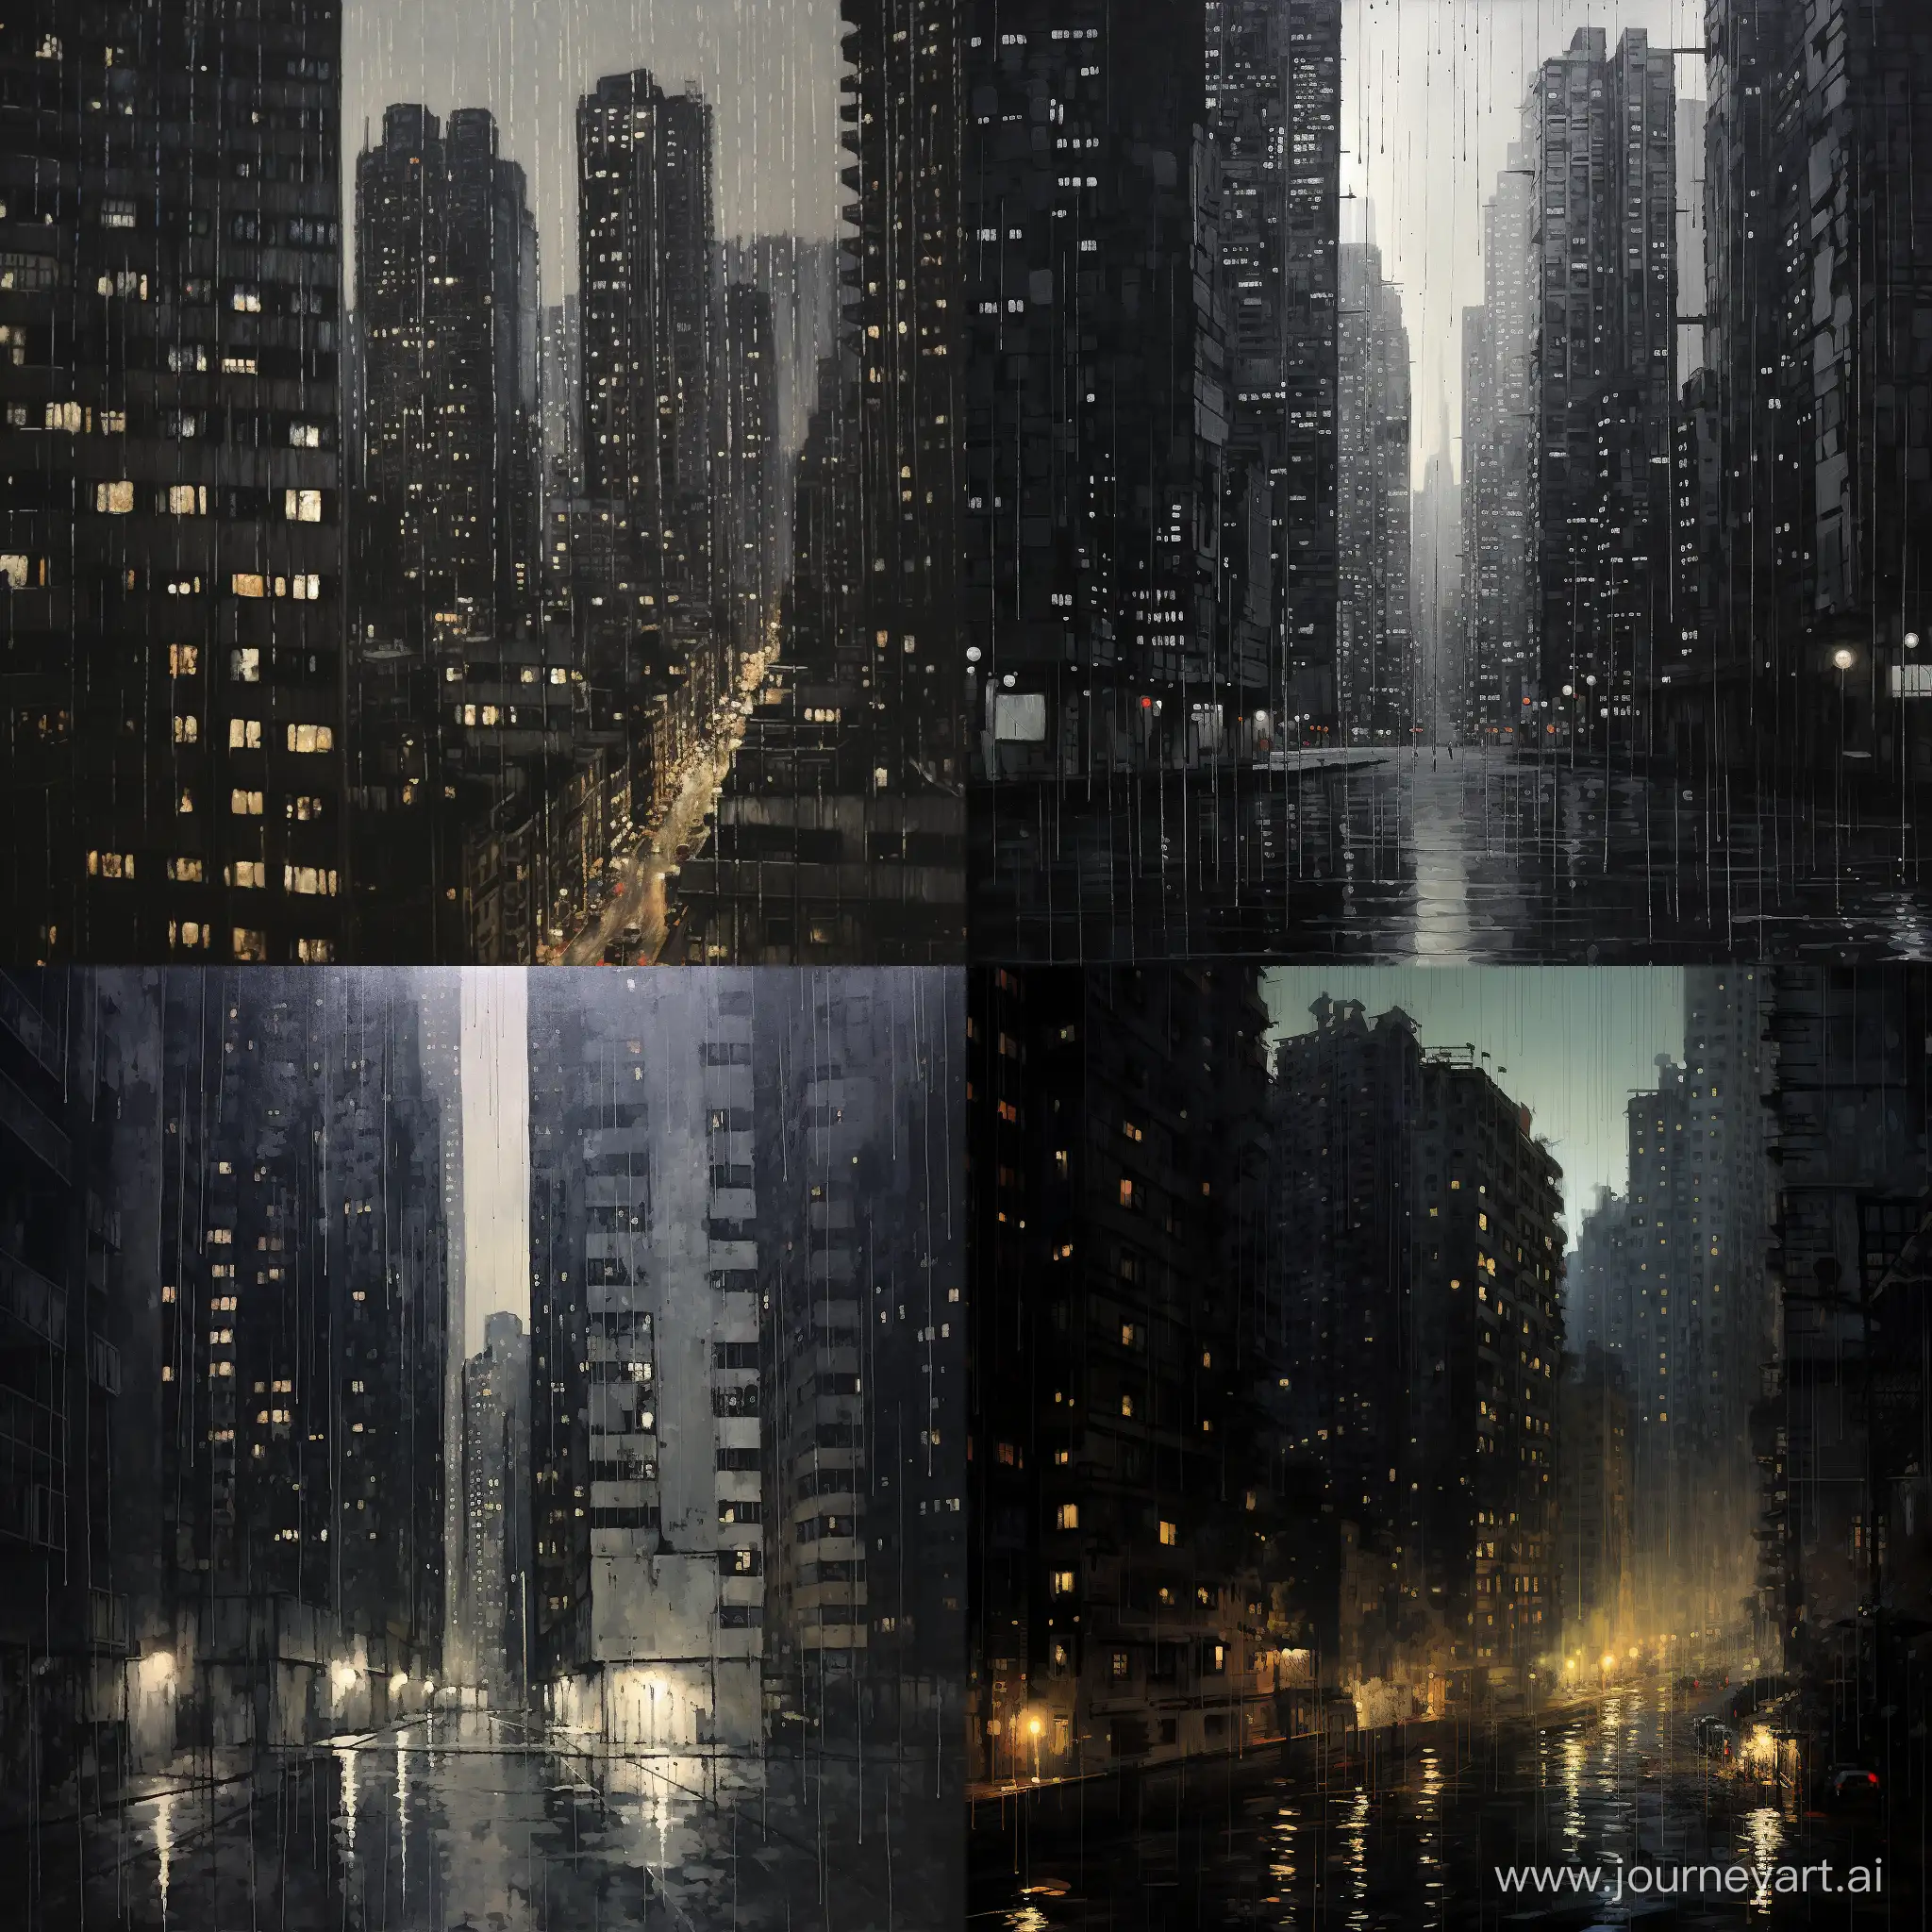 Urban-Nightscapes-Gray-Broken-HighRises-in-the-Night-Rain